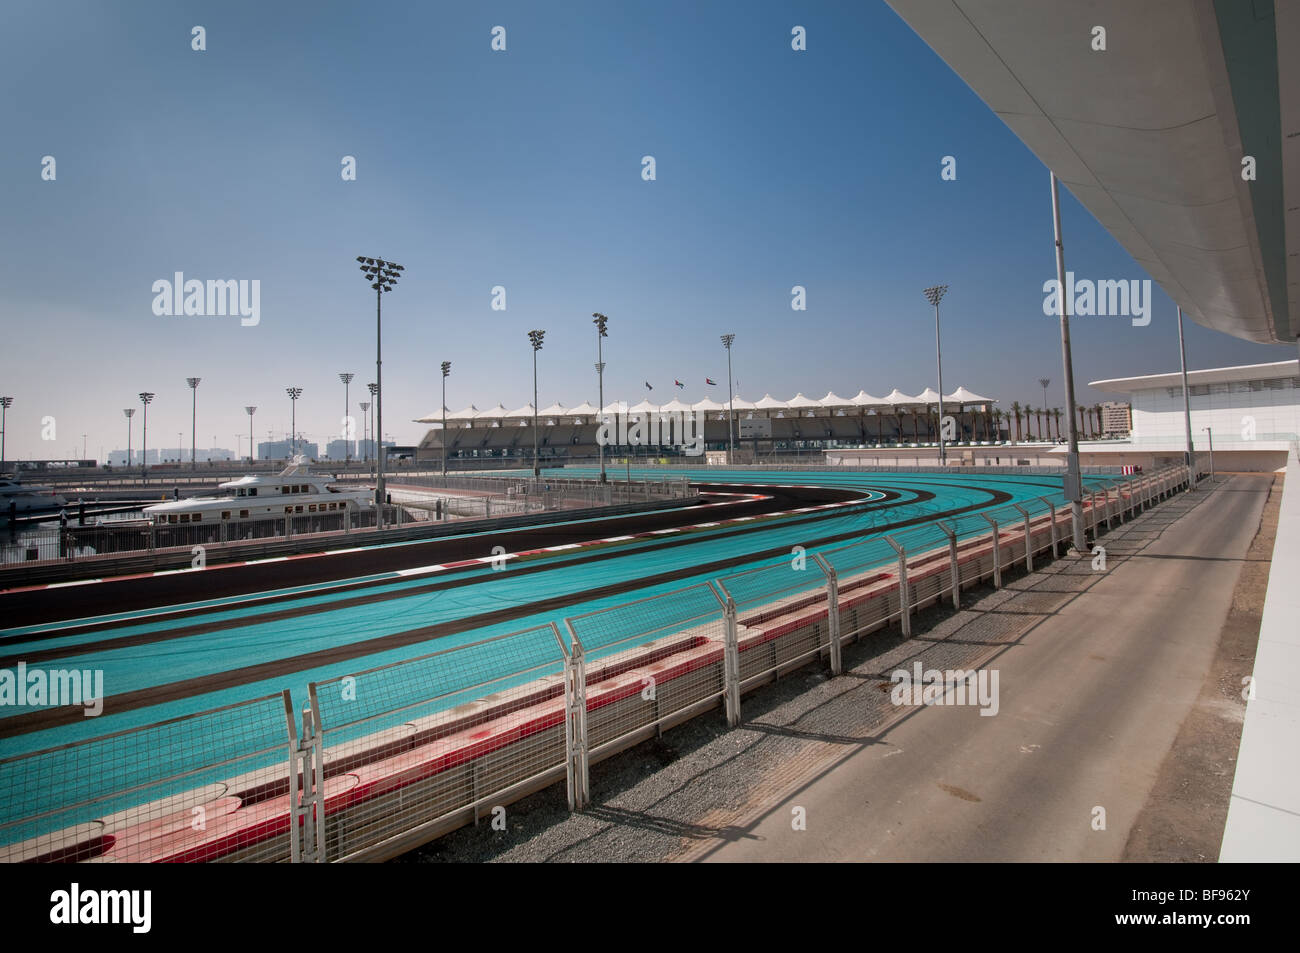 Abu Dhabi Yas Marina Grand Prix de Fórmula 1 Pista de Carreras Foto de stock